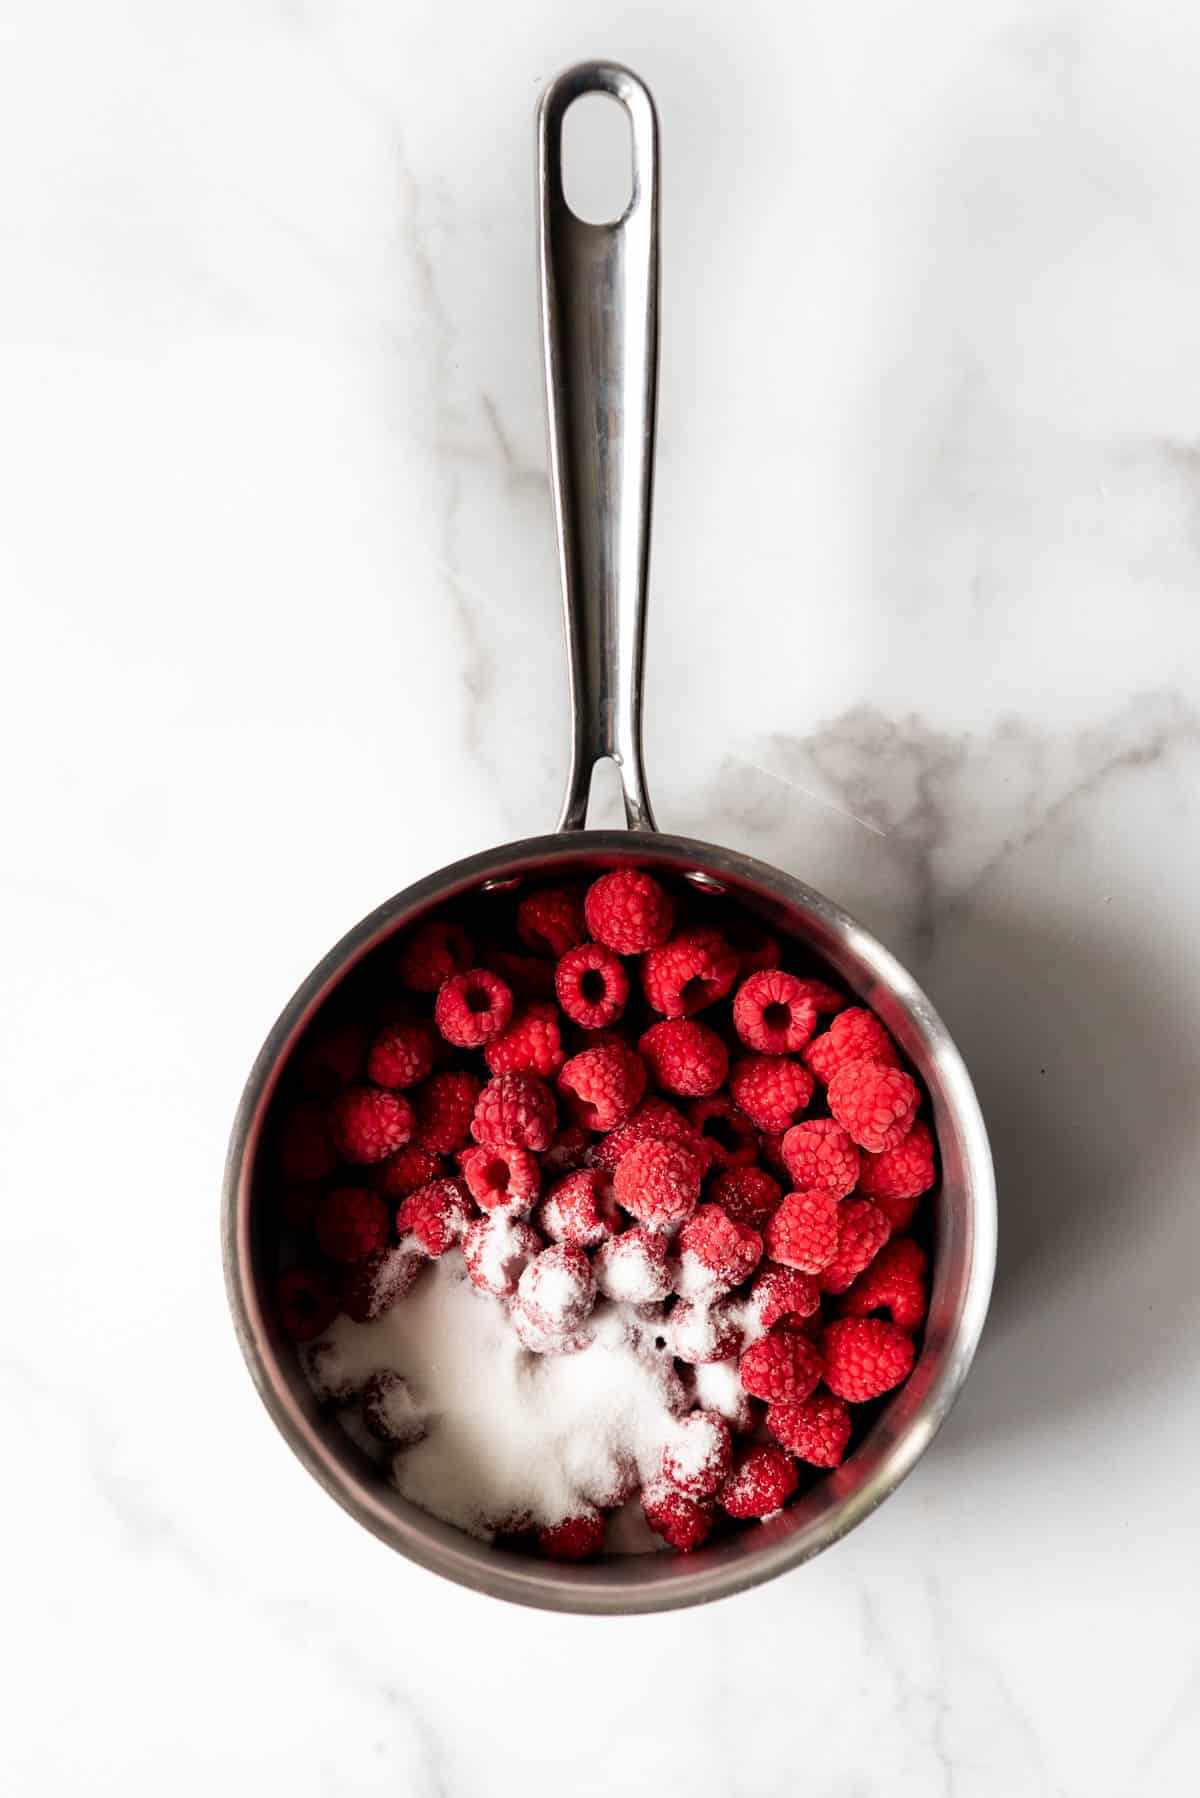 An image of raspberries and sugar in a saucepan.